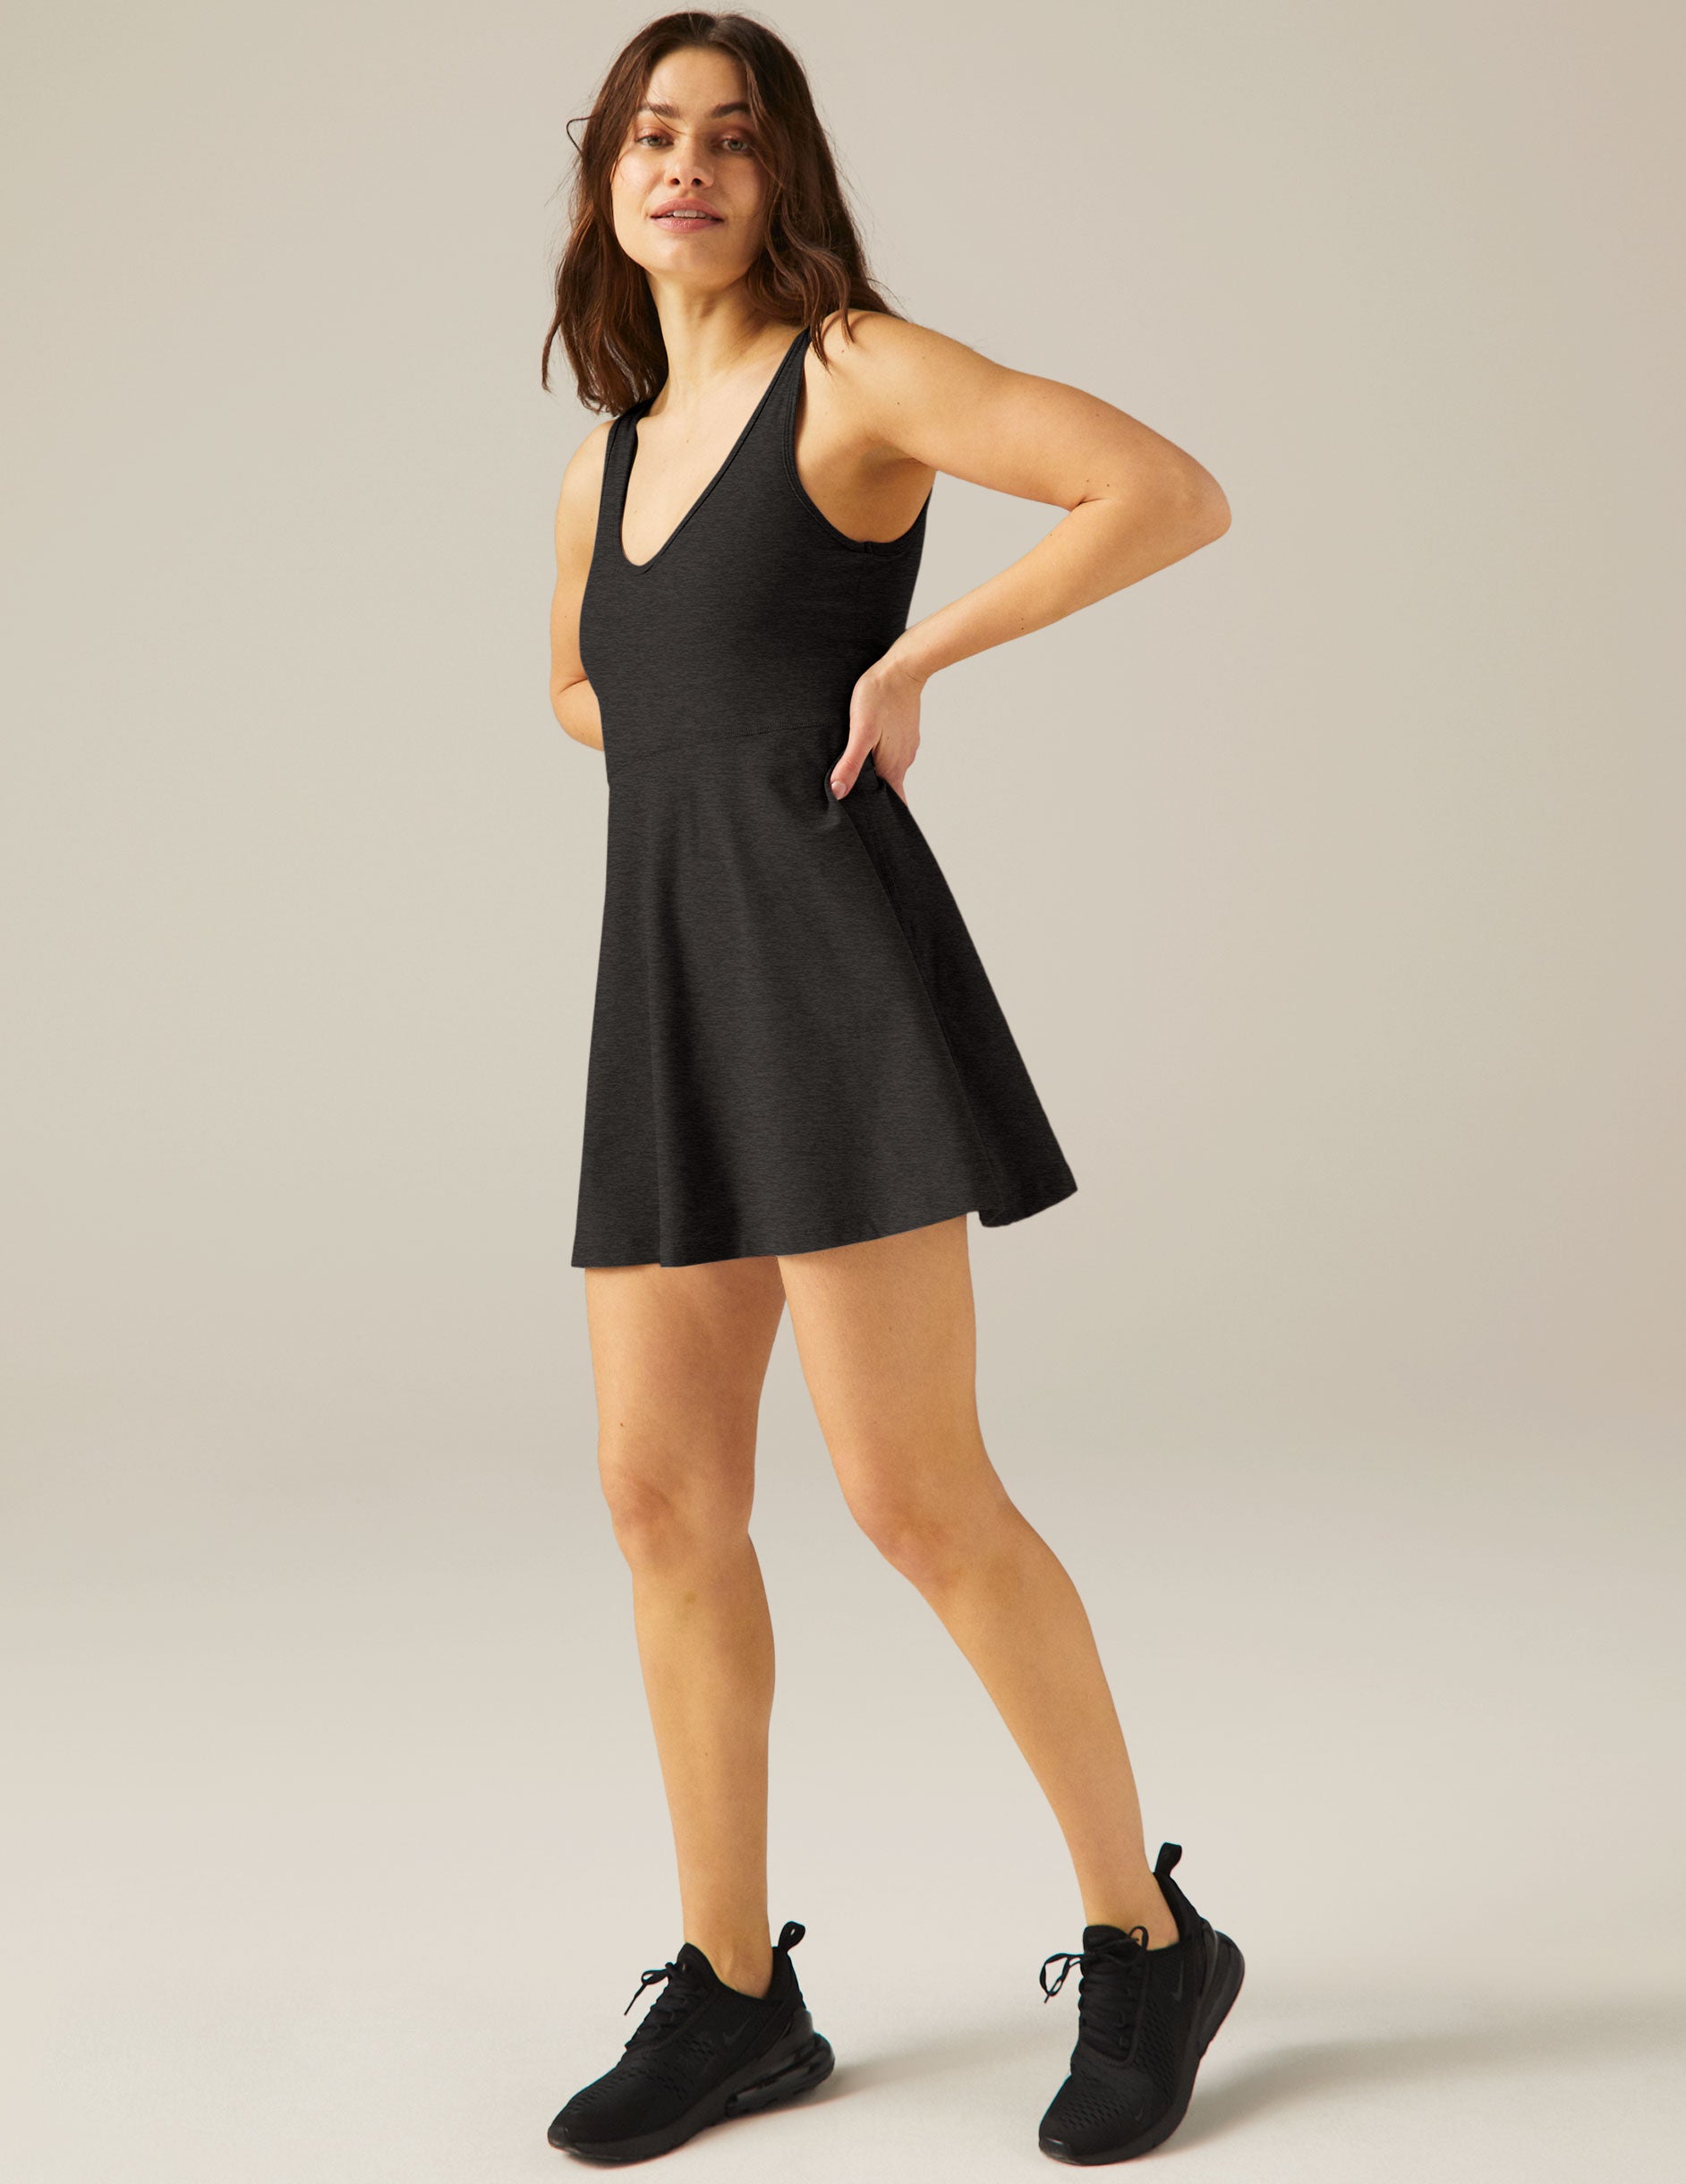 black flare mini dress with short pocket detail underneath